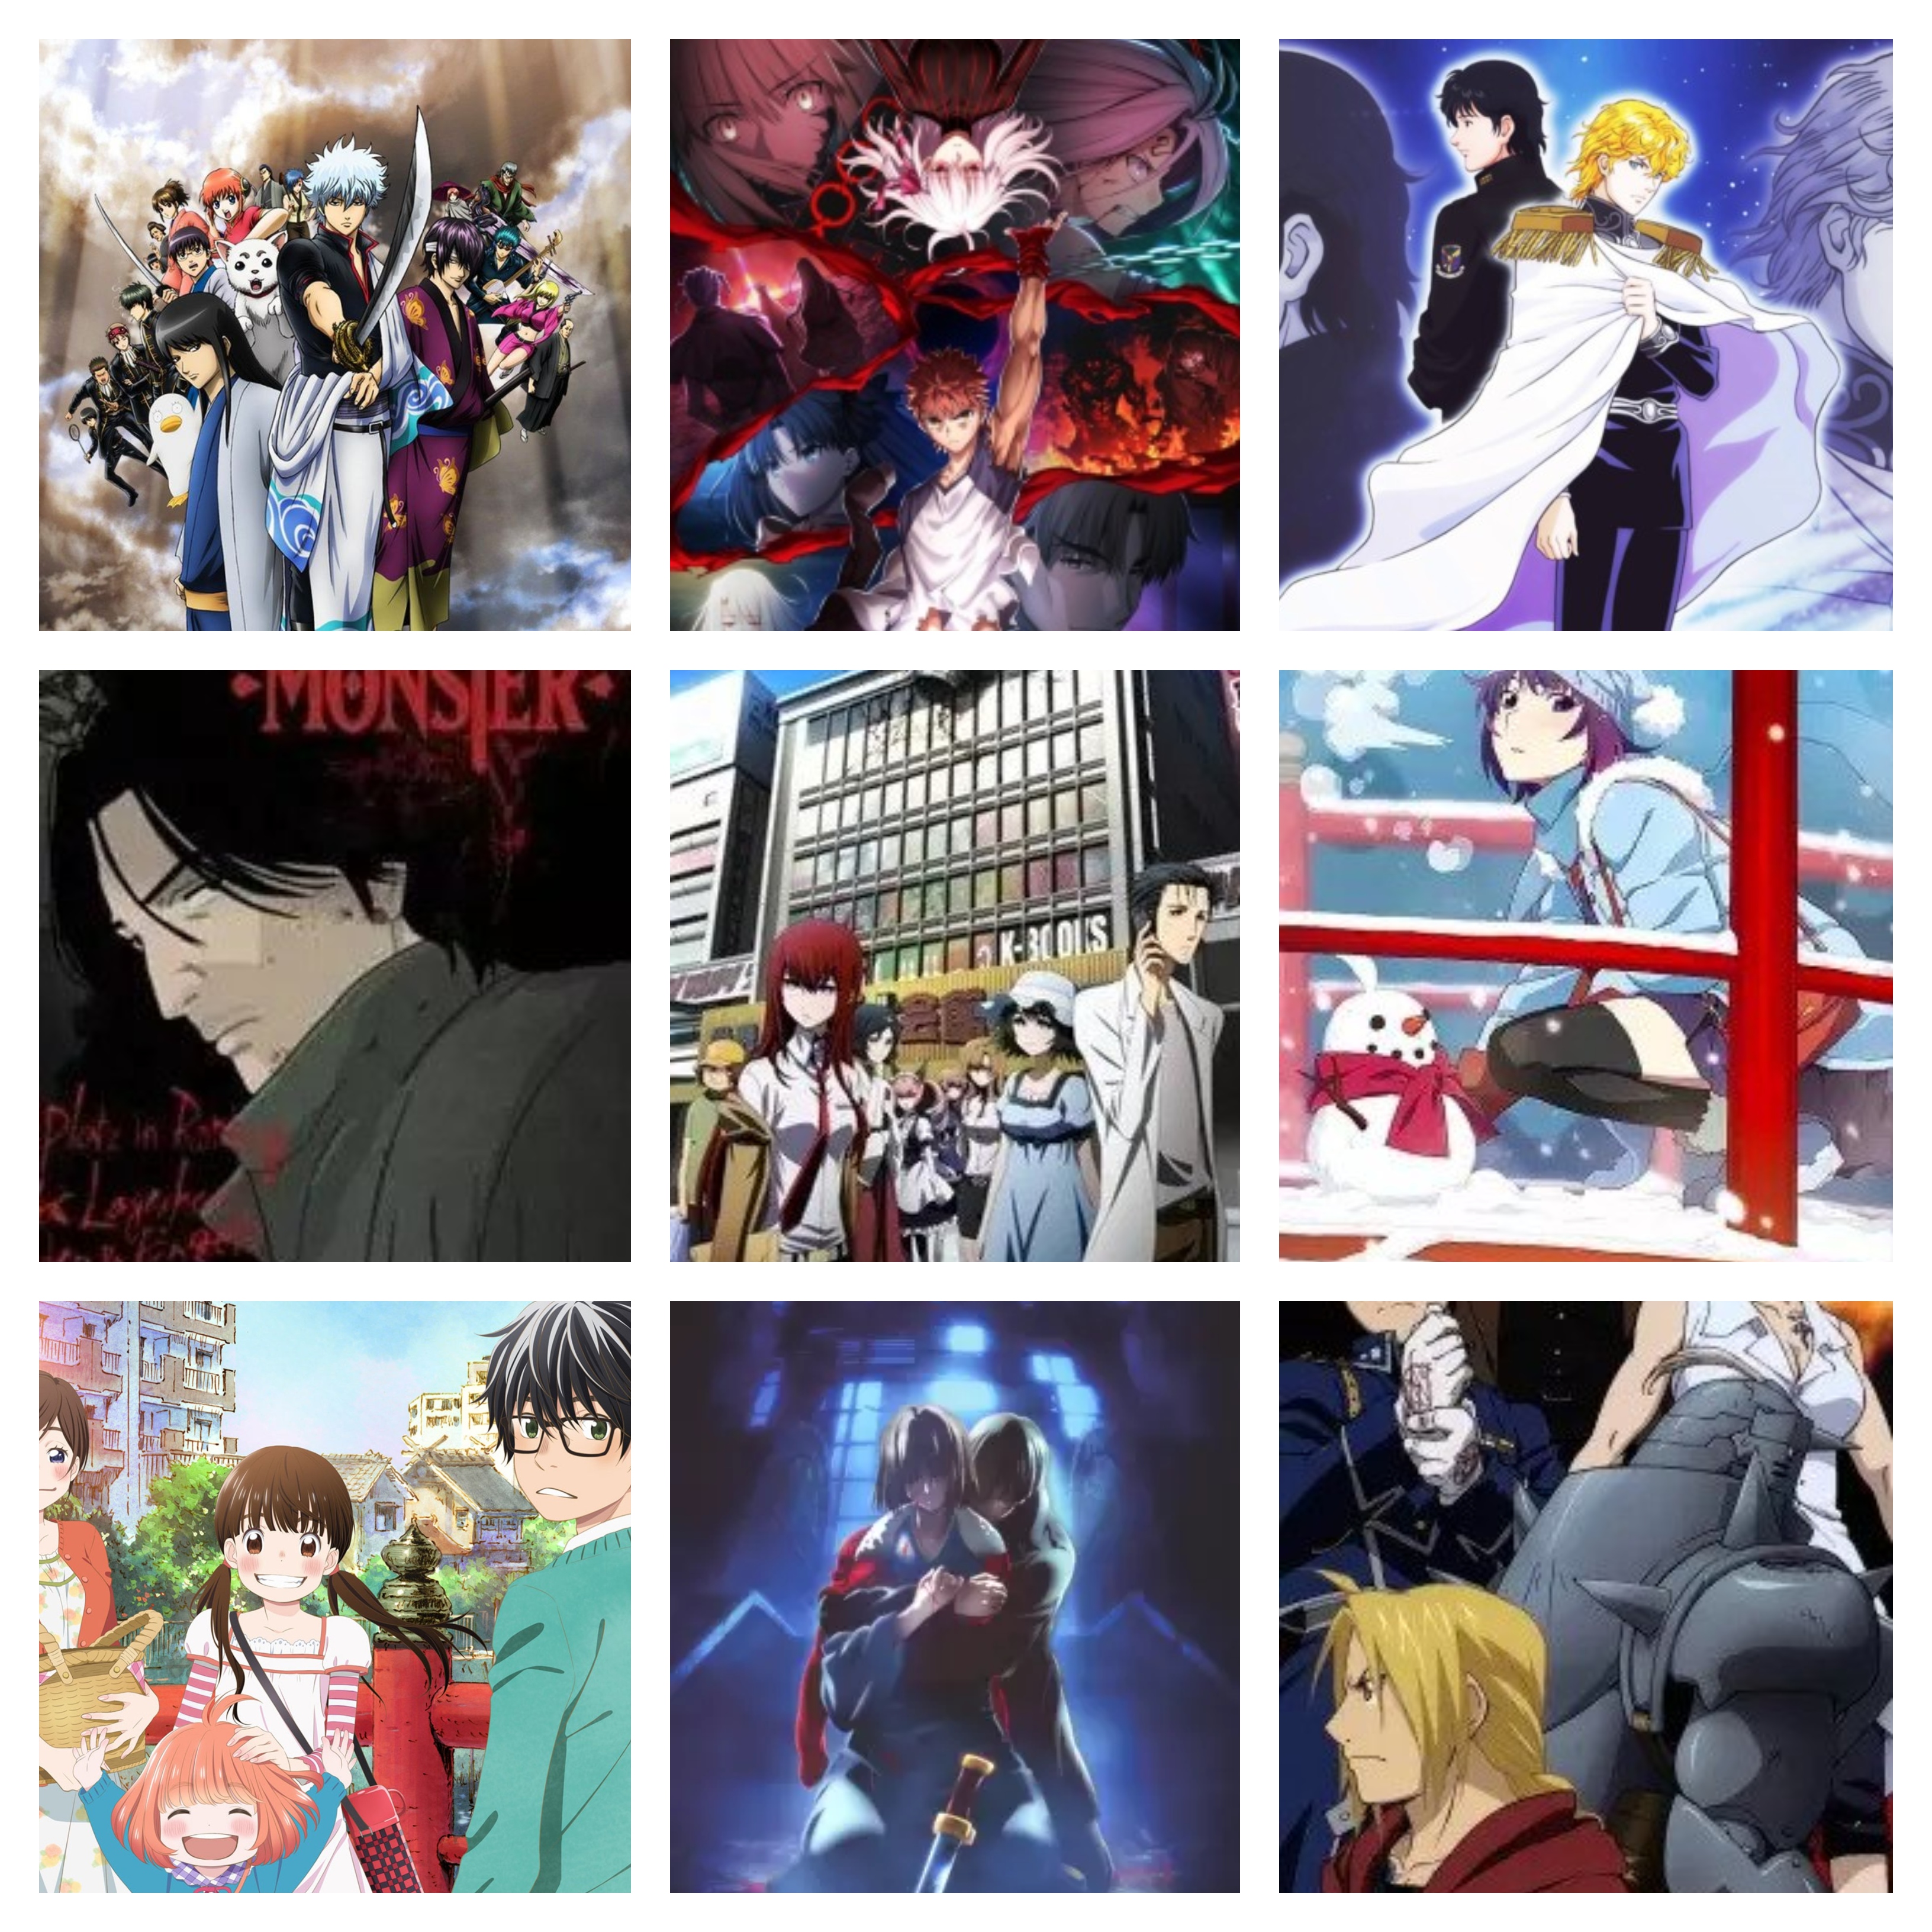 3 Lists of 3 Anime